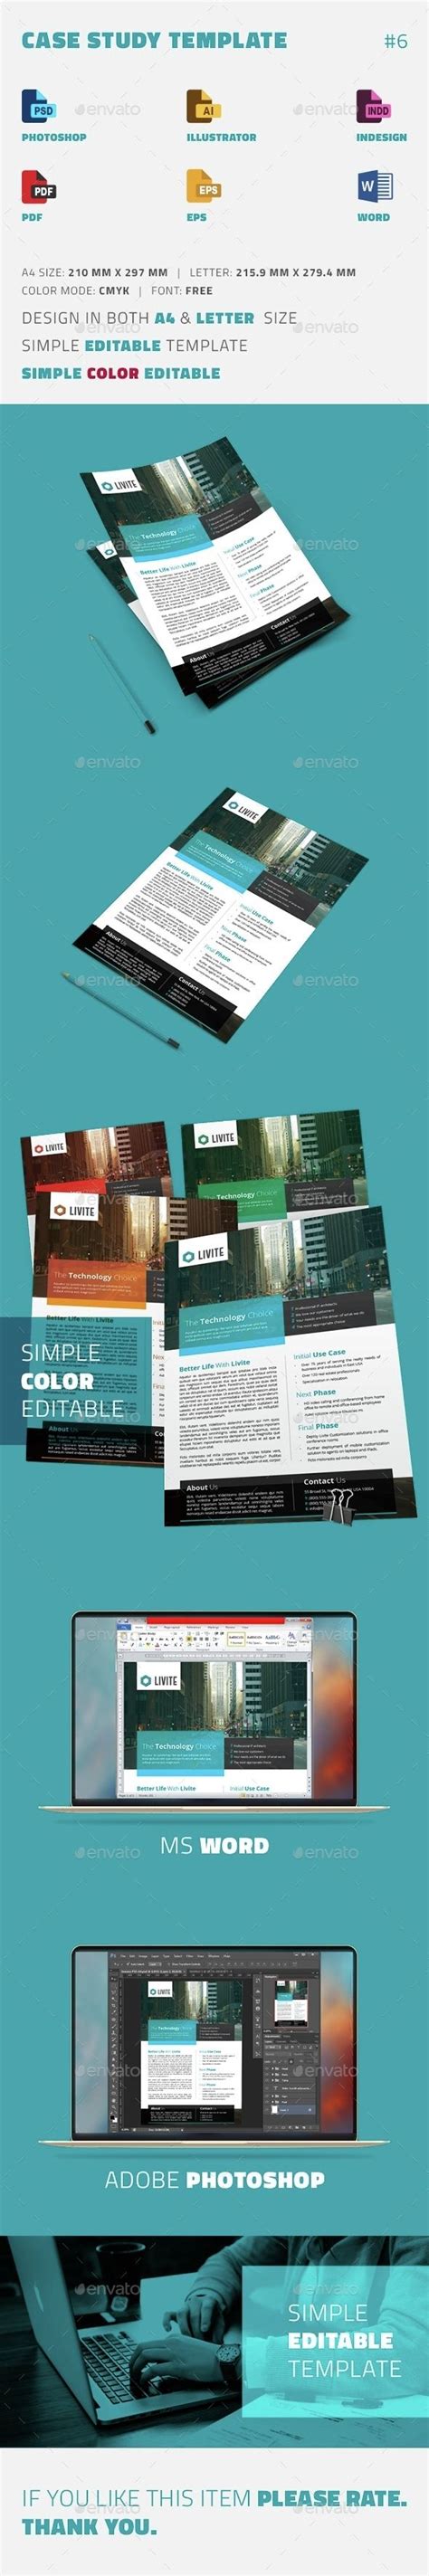 Case Study Template | Flyer | Case study template, Case study design, Case study